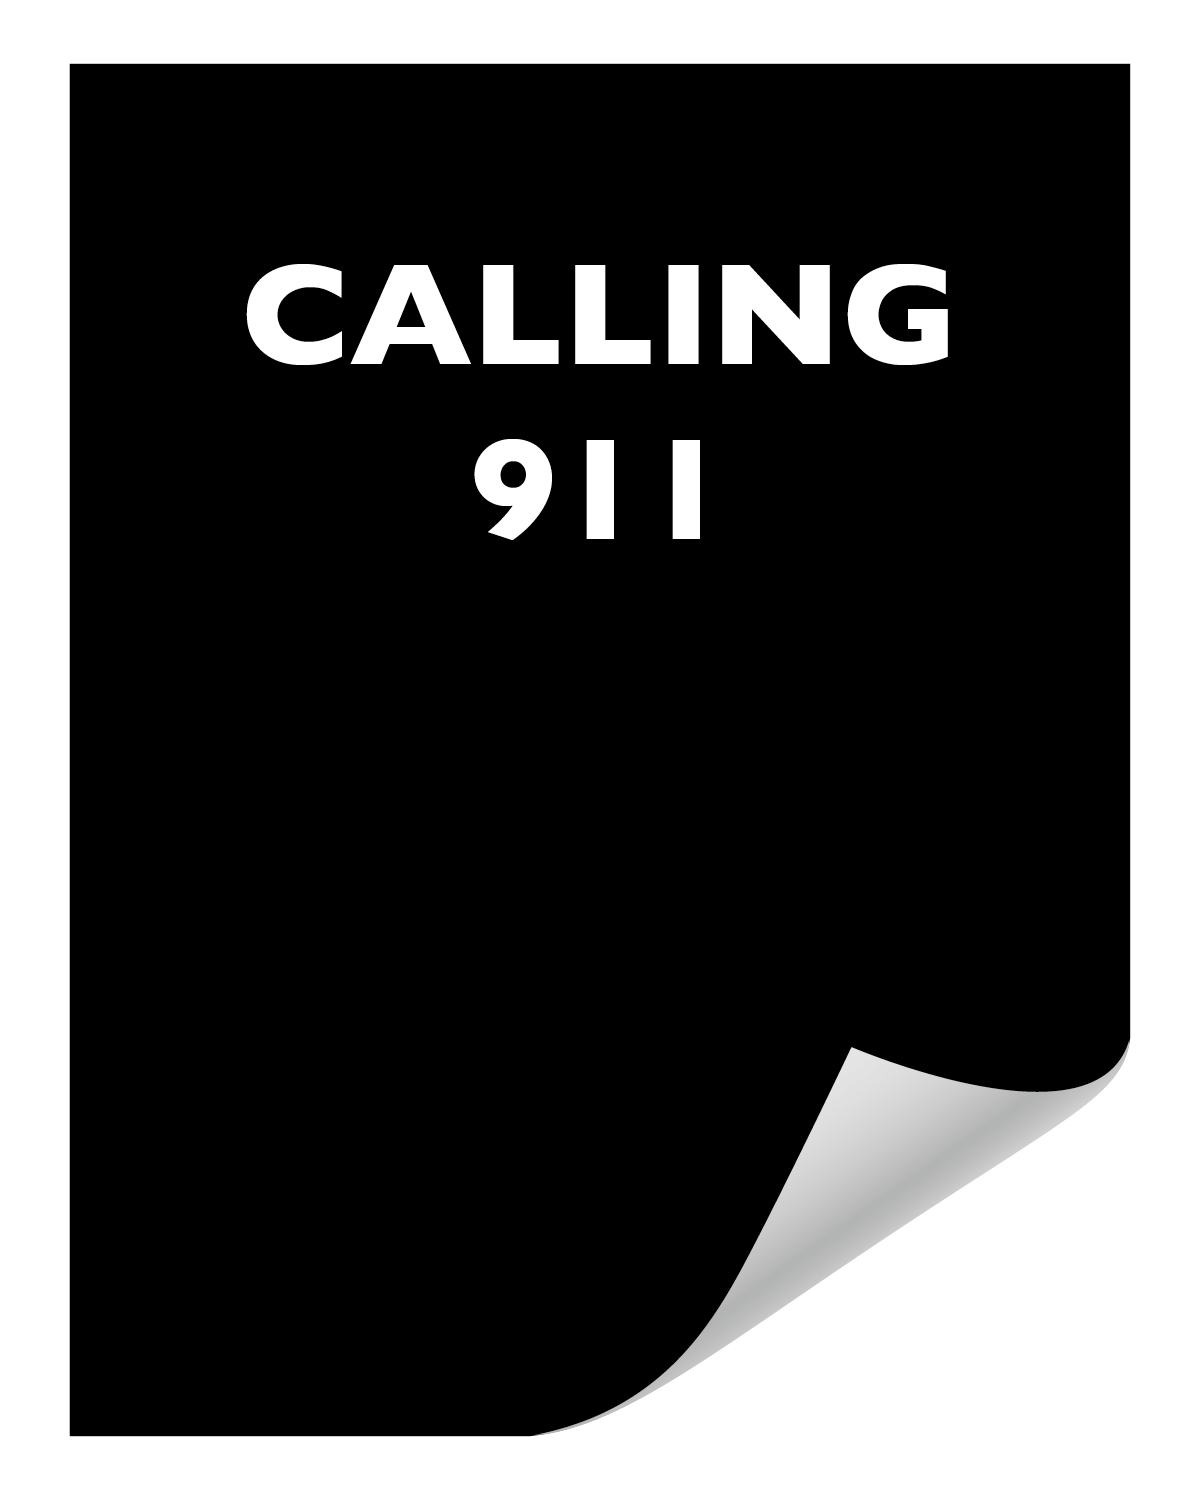 Calling 911 black background